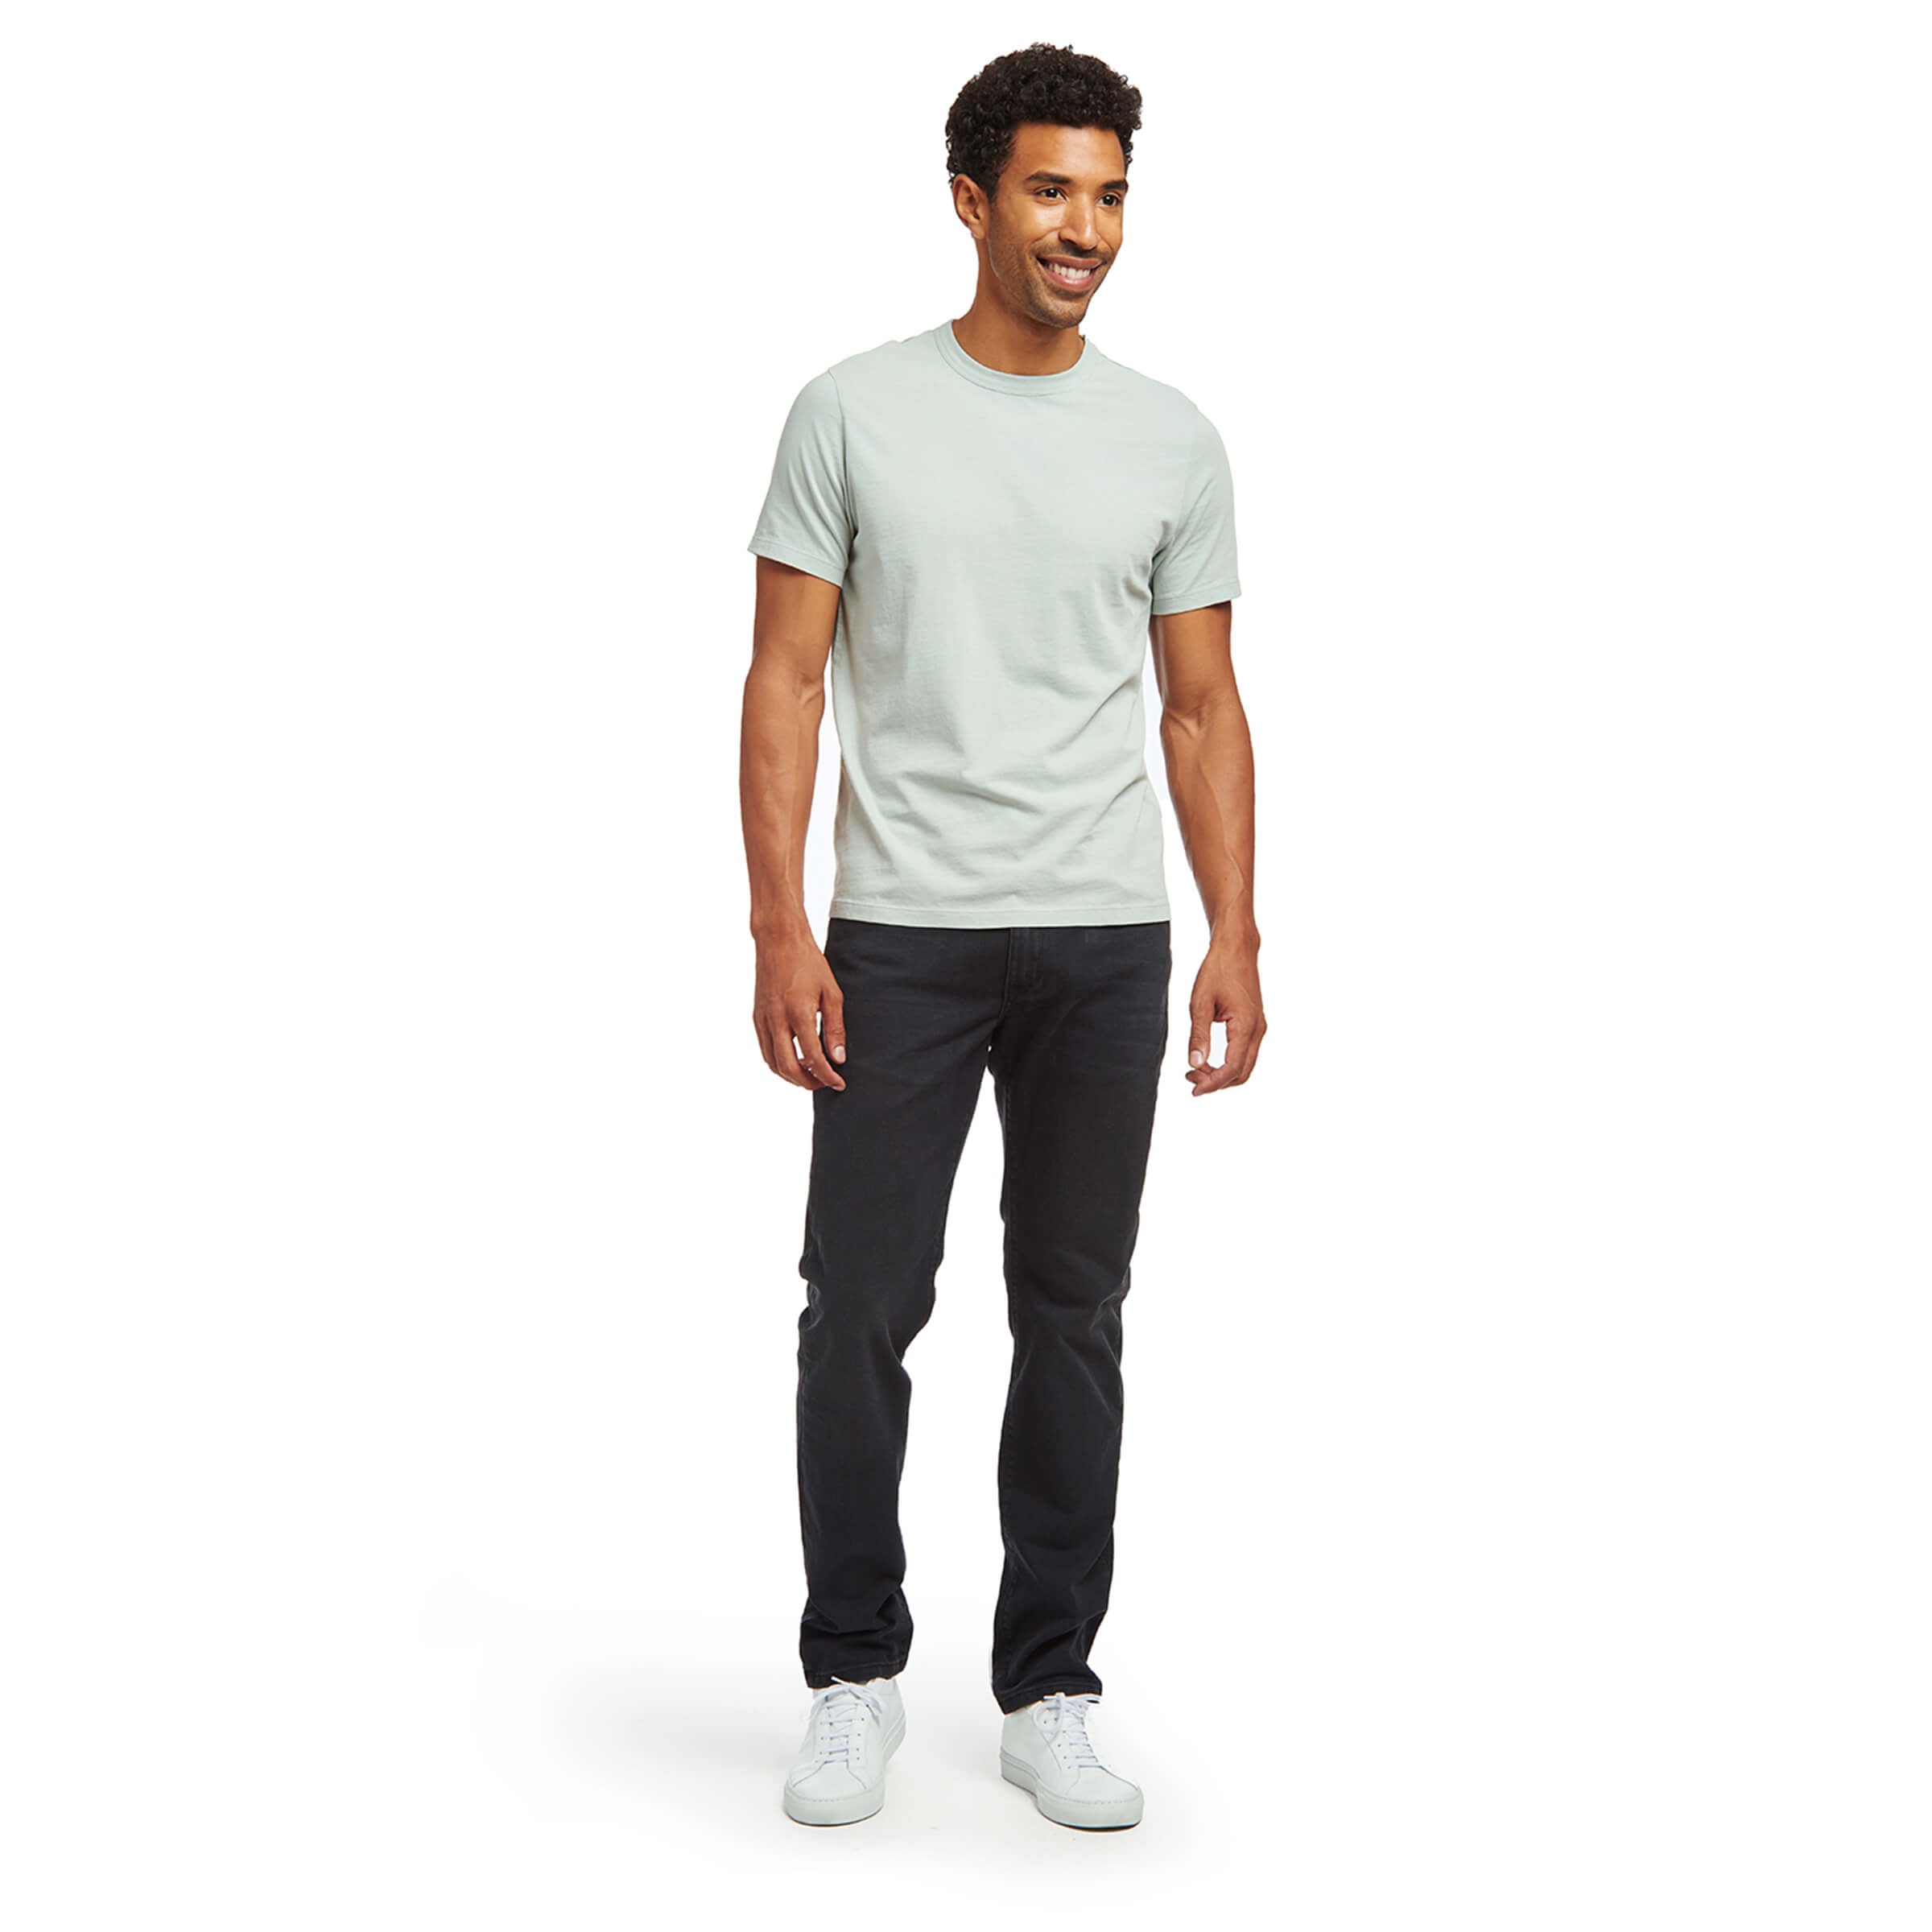 Men wearing Gris oscuro/medio Slim Stone Jeans